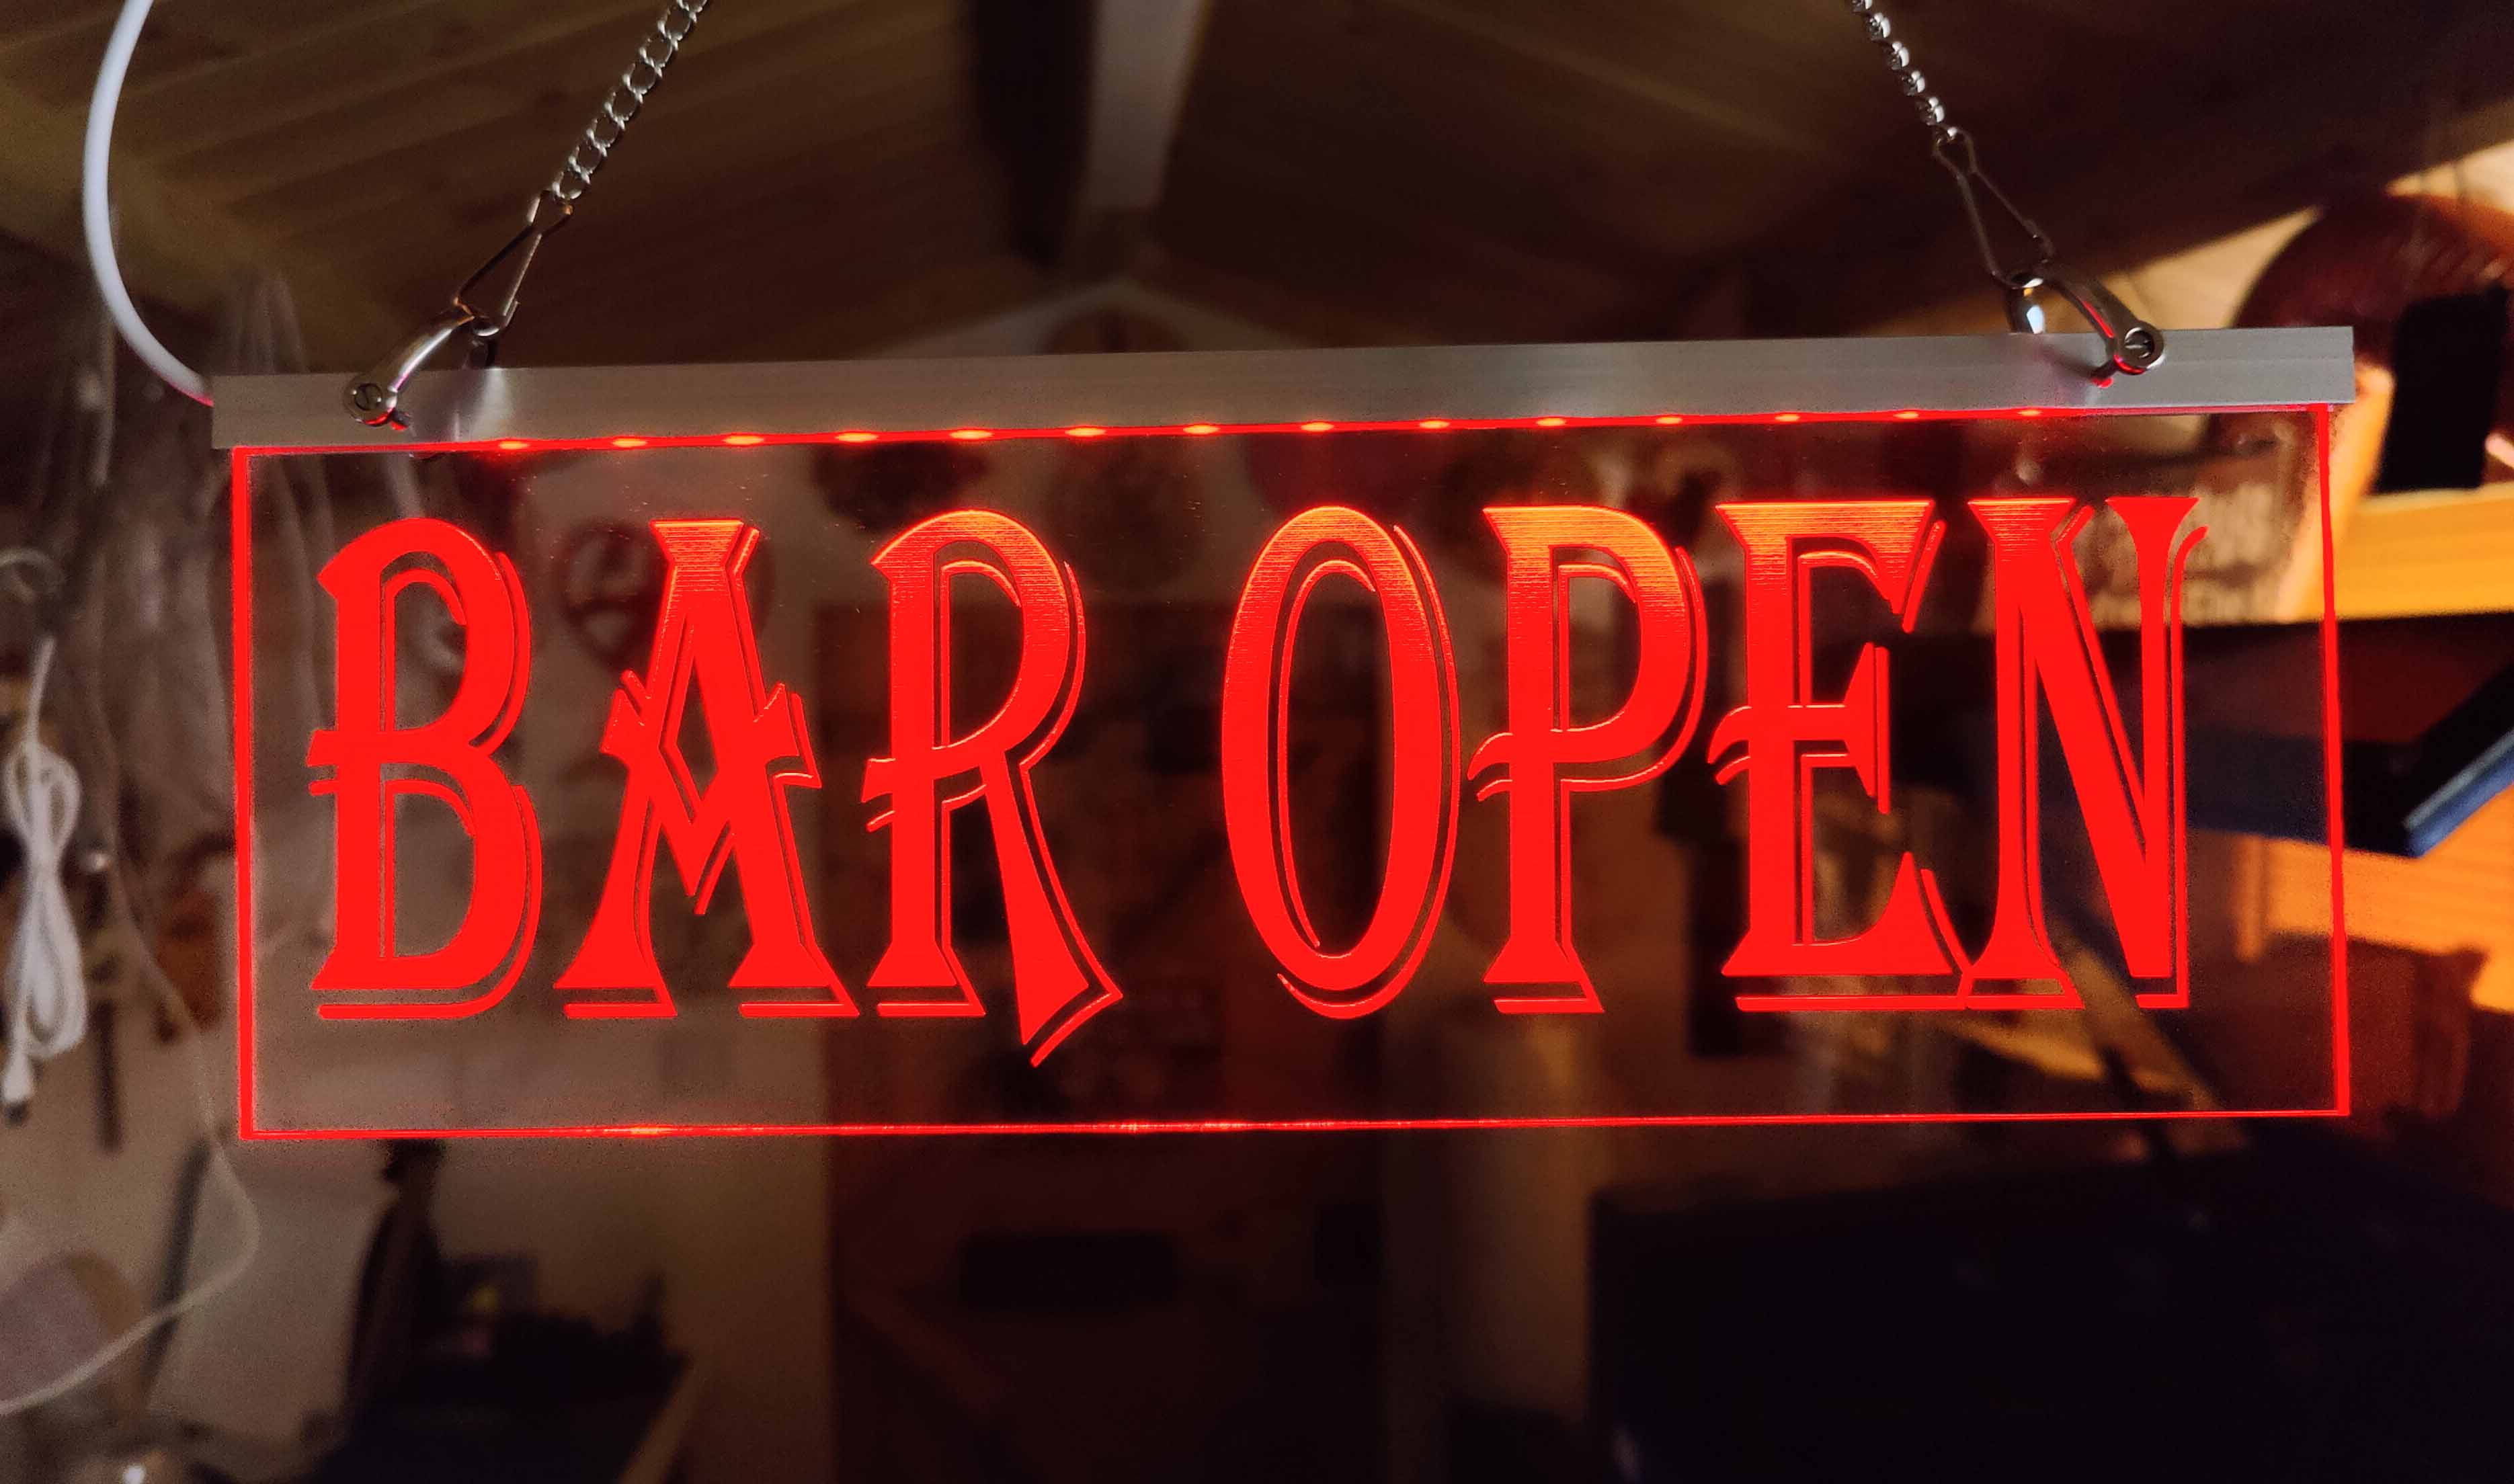 bar open led sign light up